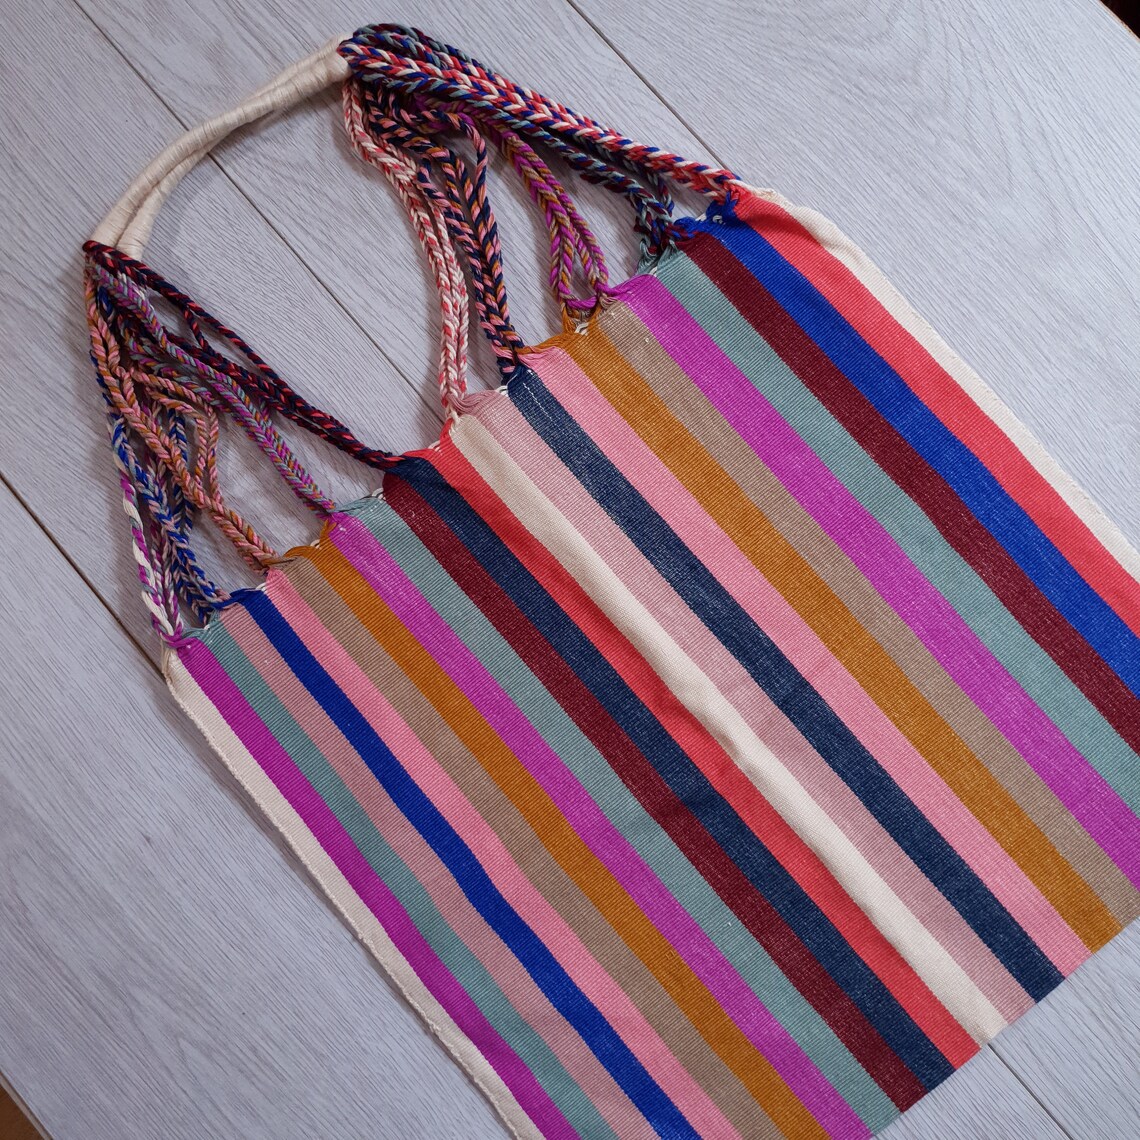 Handmade Mexican colourful bag from Chiapas / Boho bag | Etsy